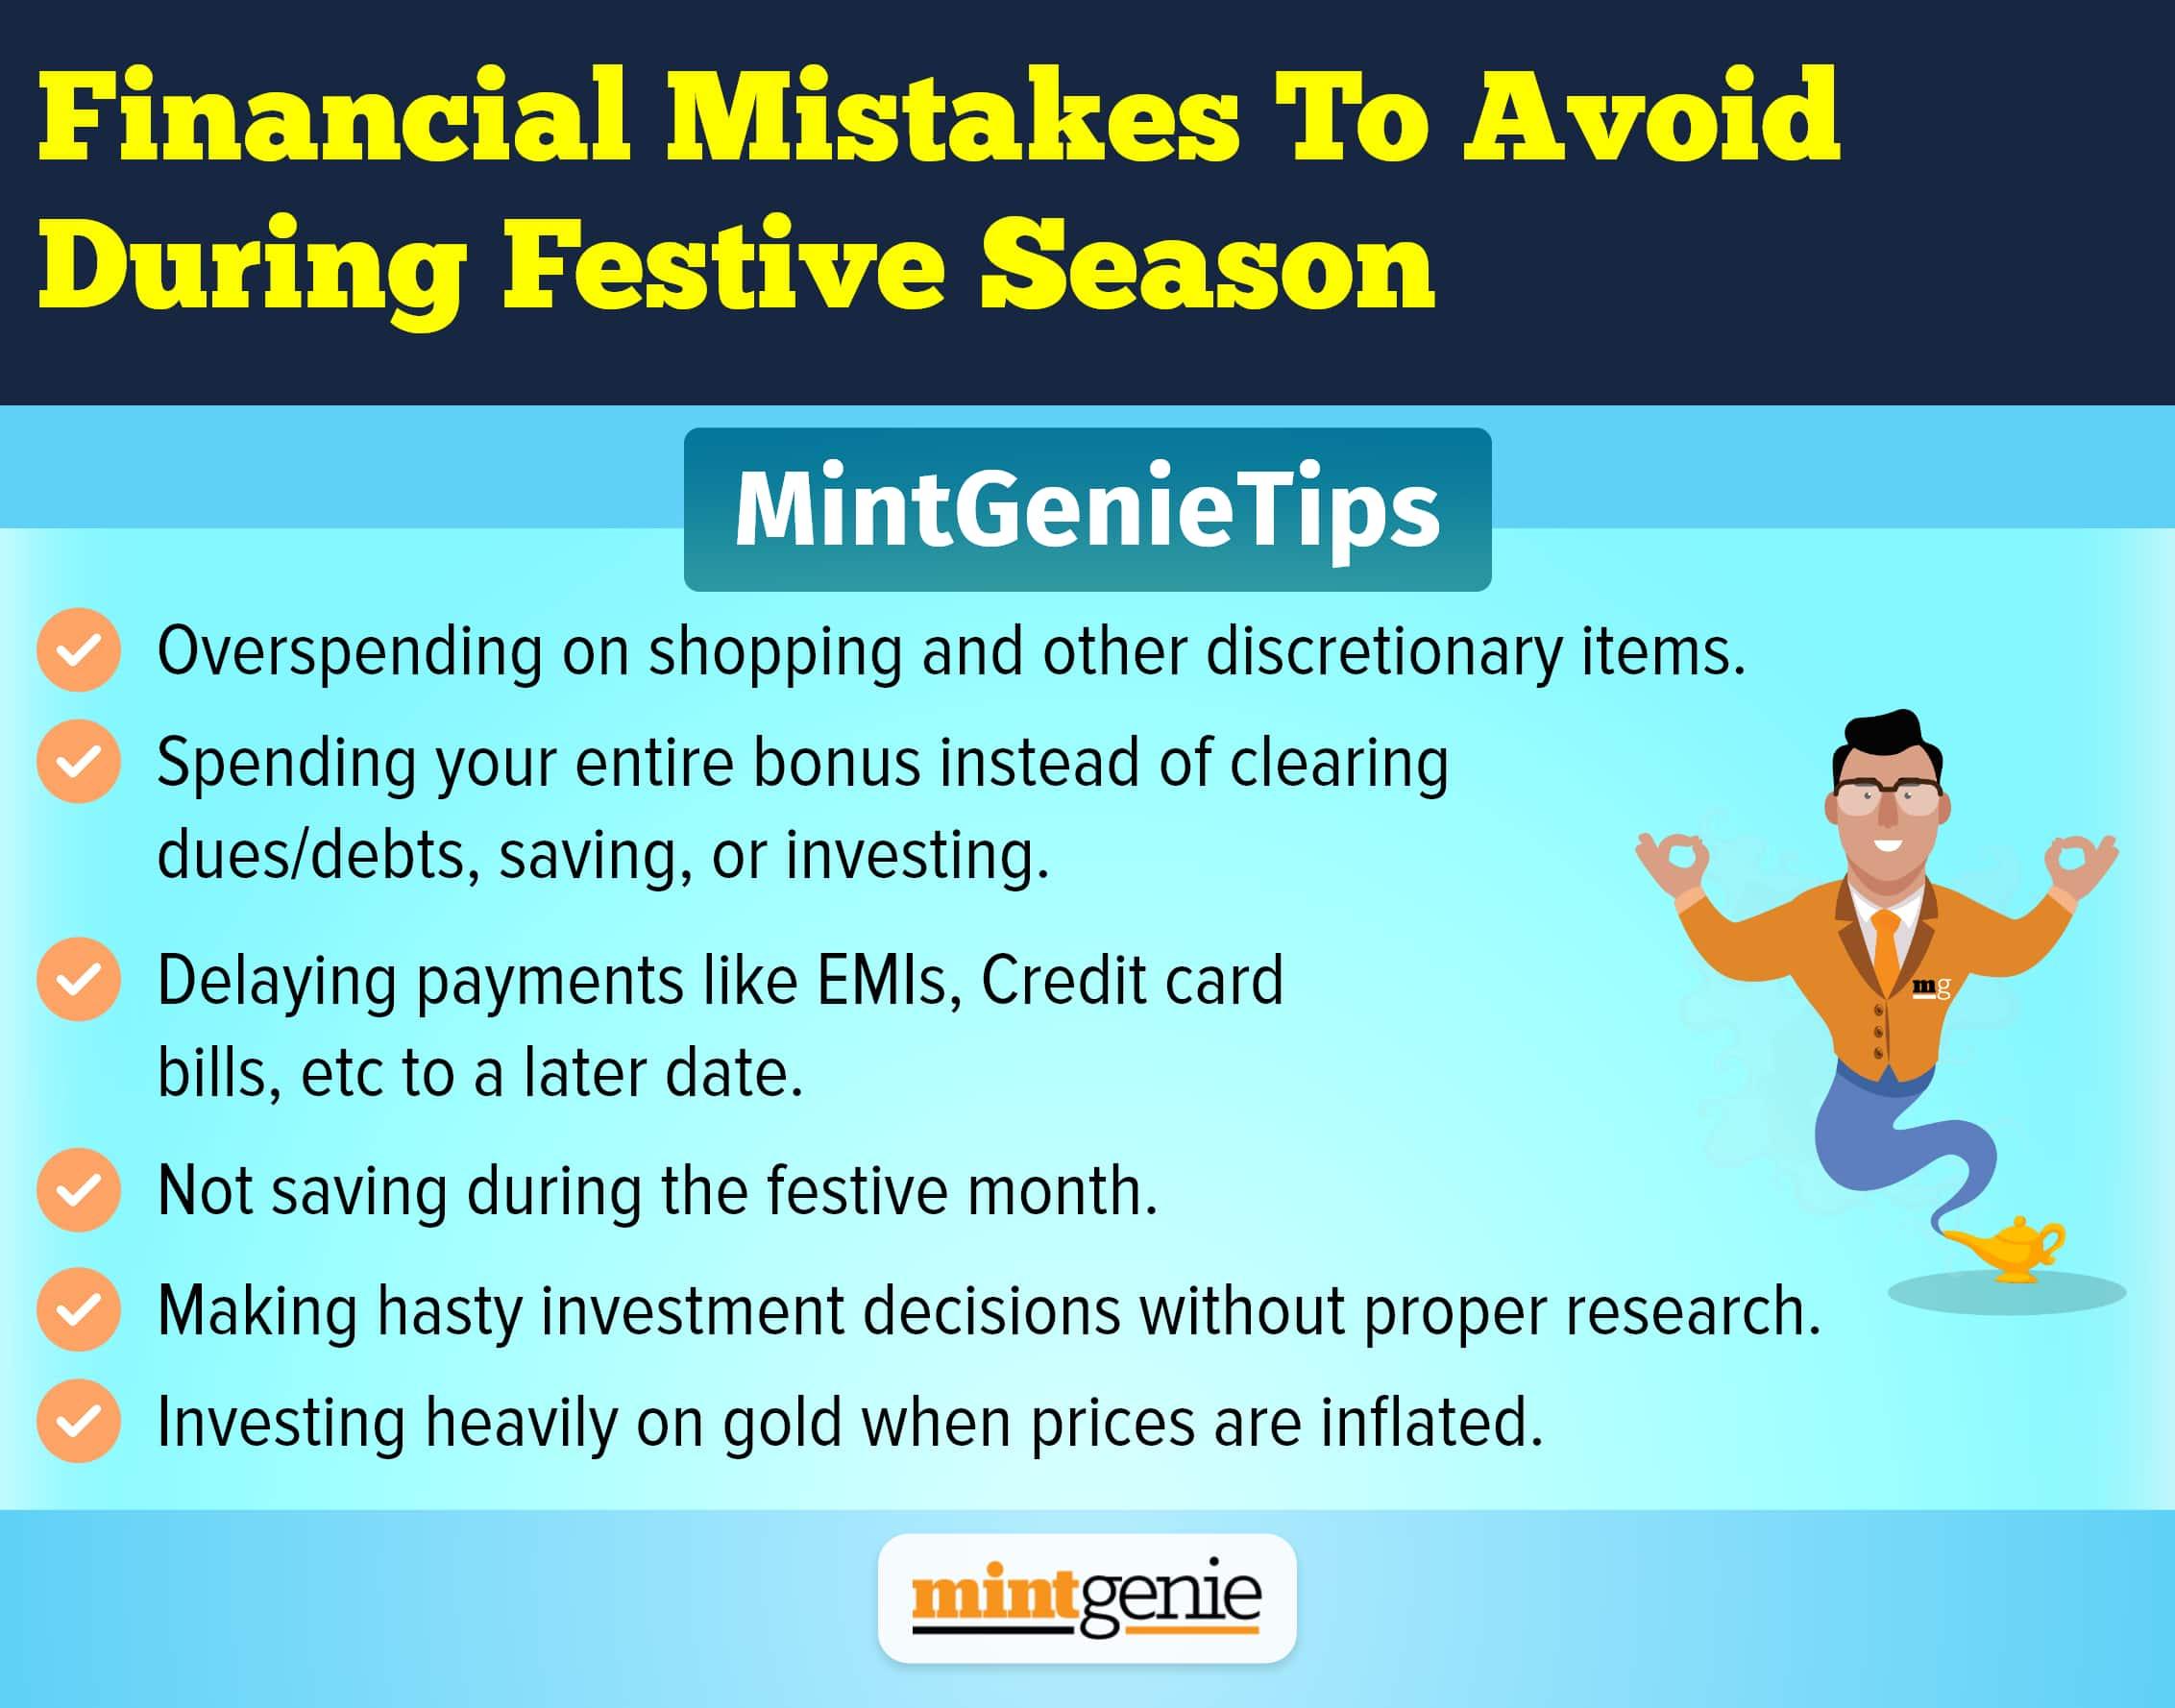 Financial Mistakes to avoid during festive season